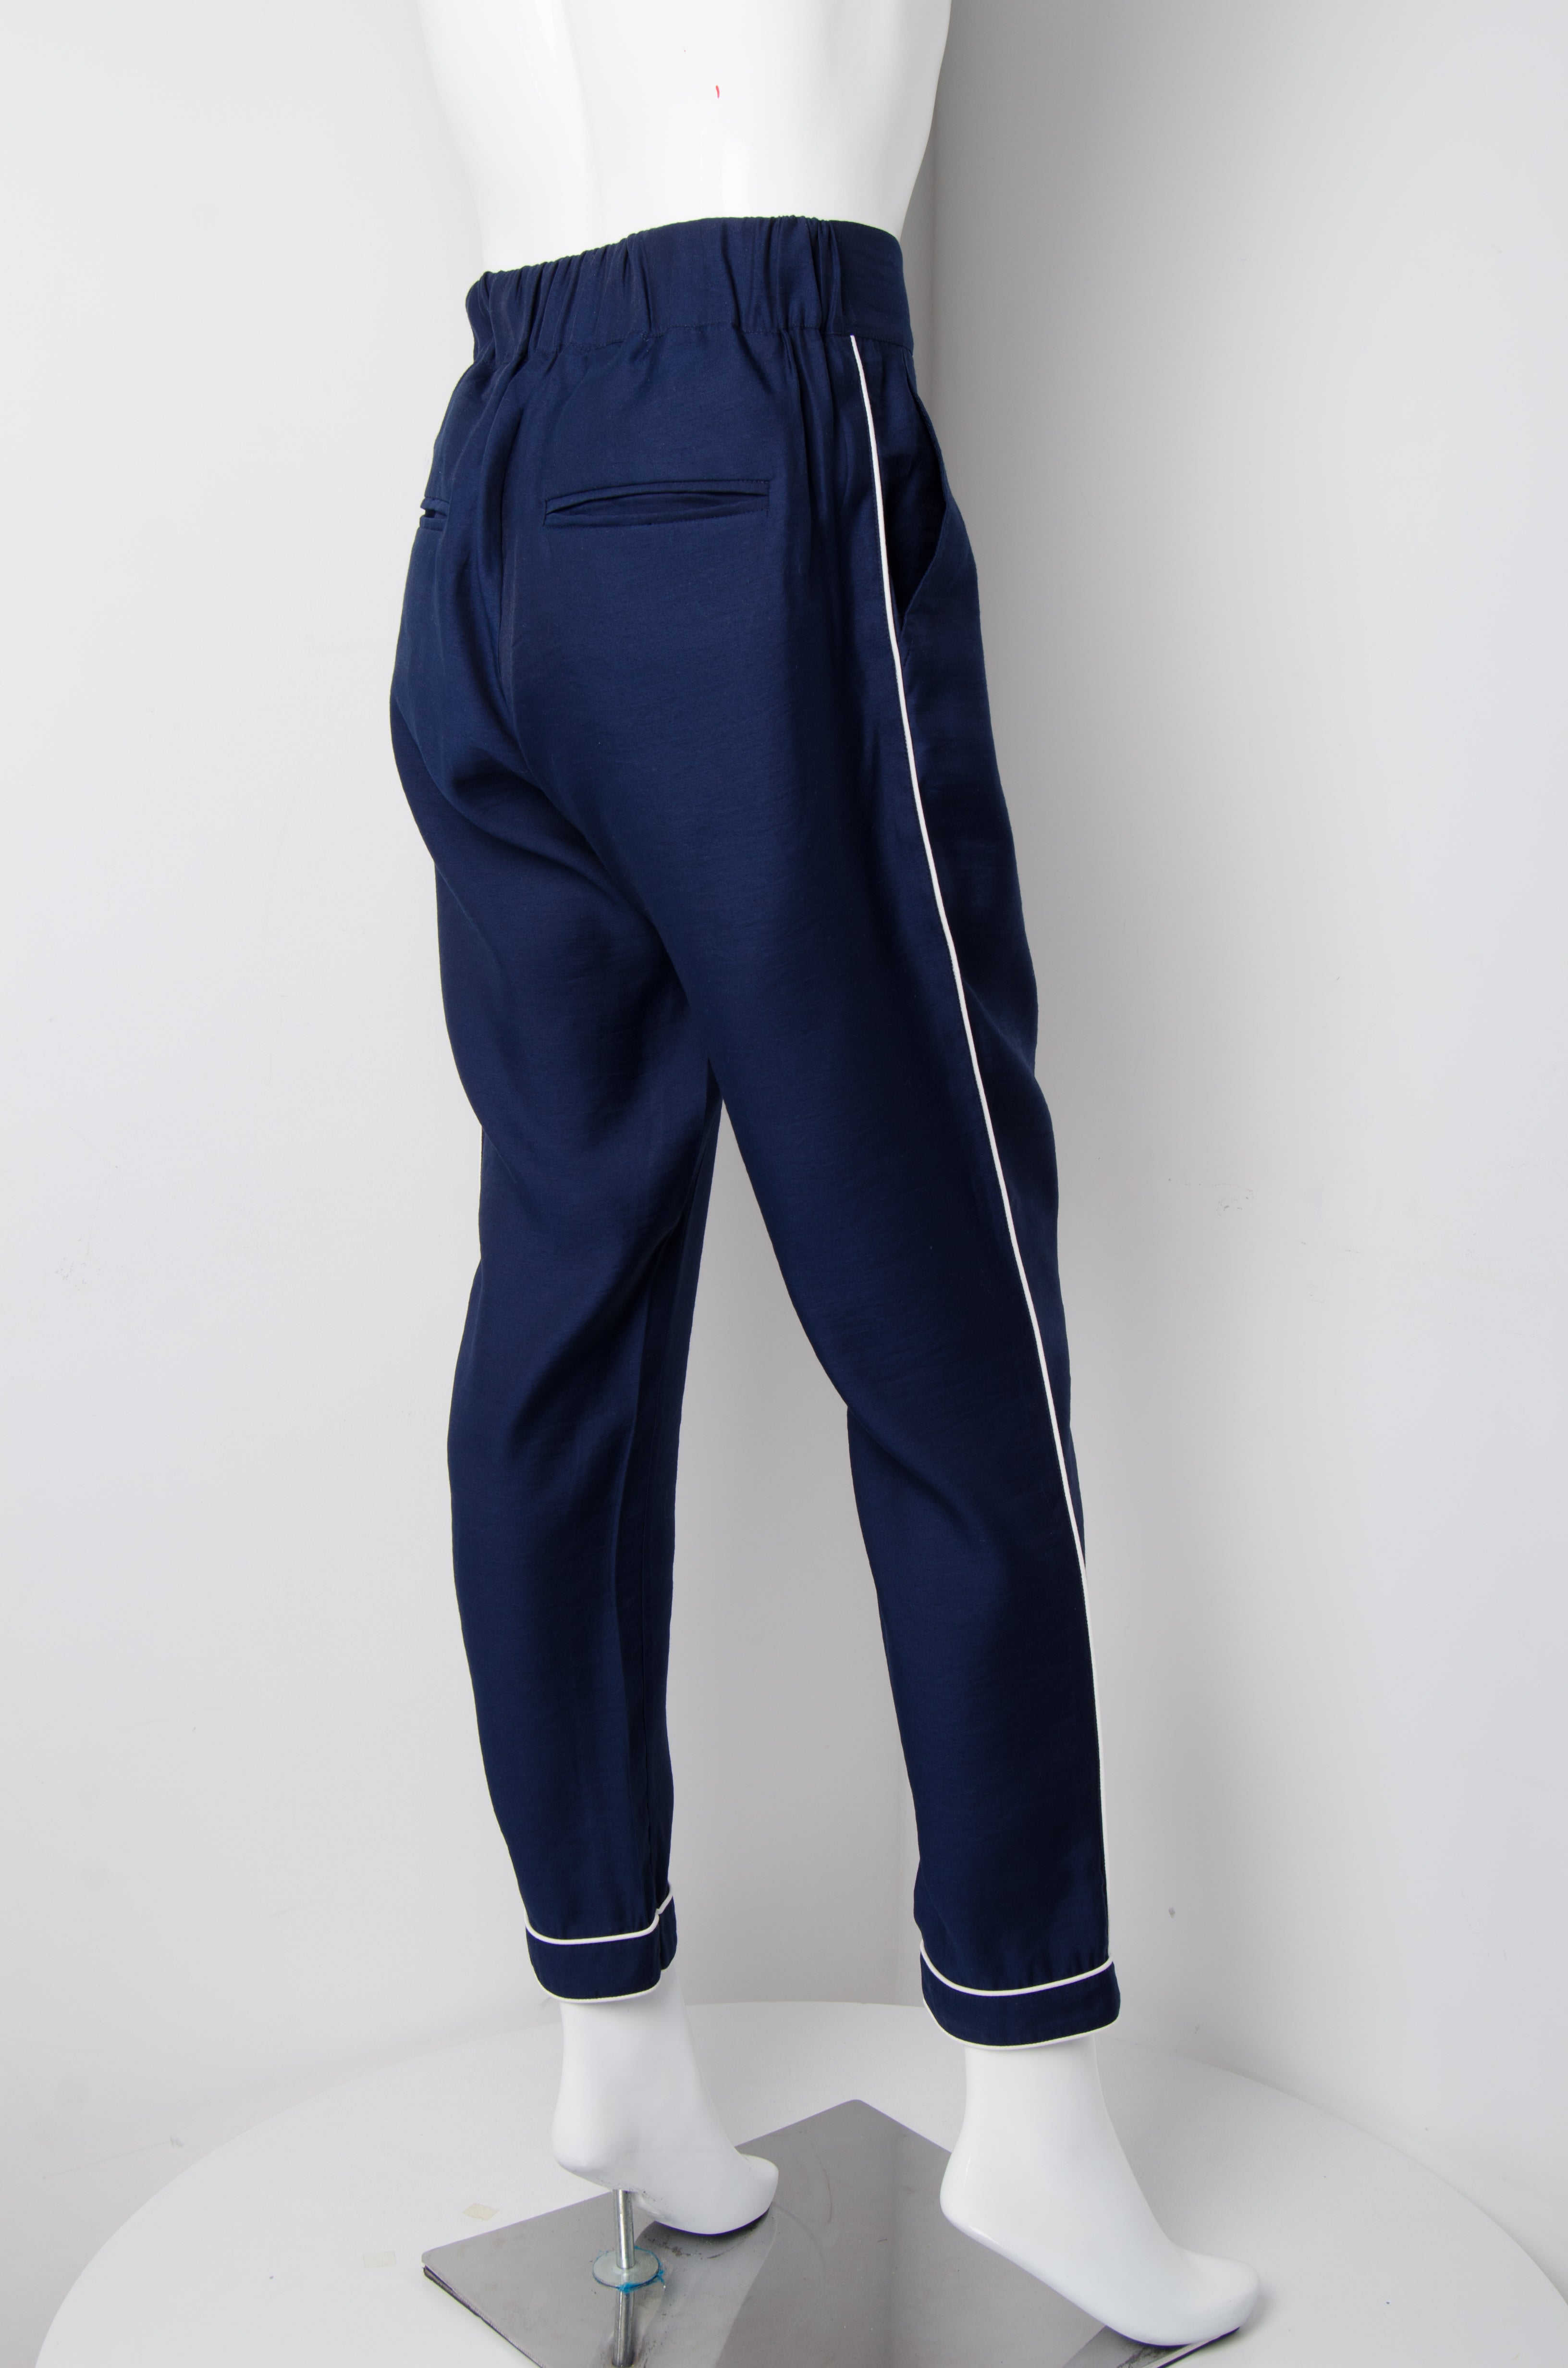 Navy Blue Pyjama Chic Pants